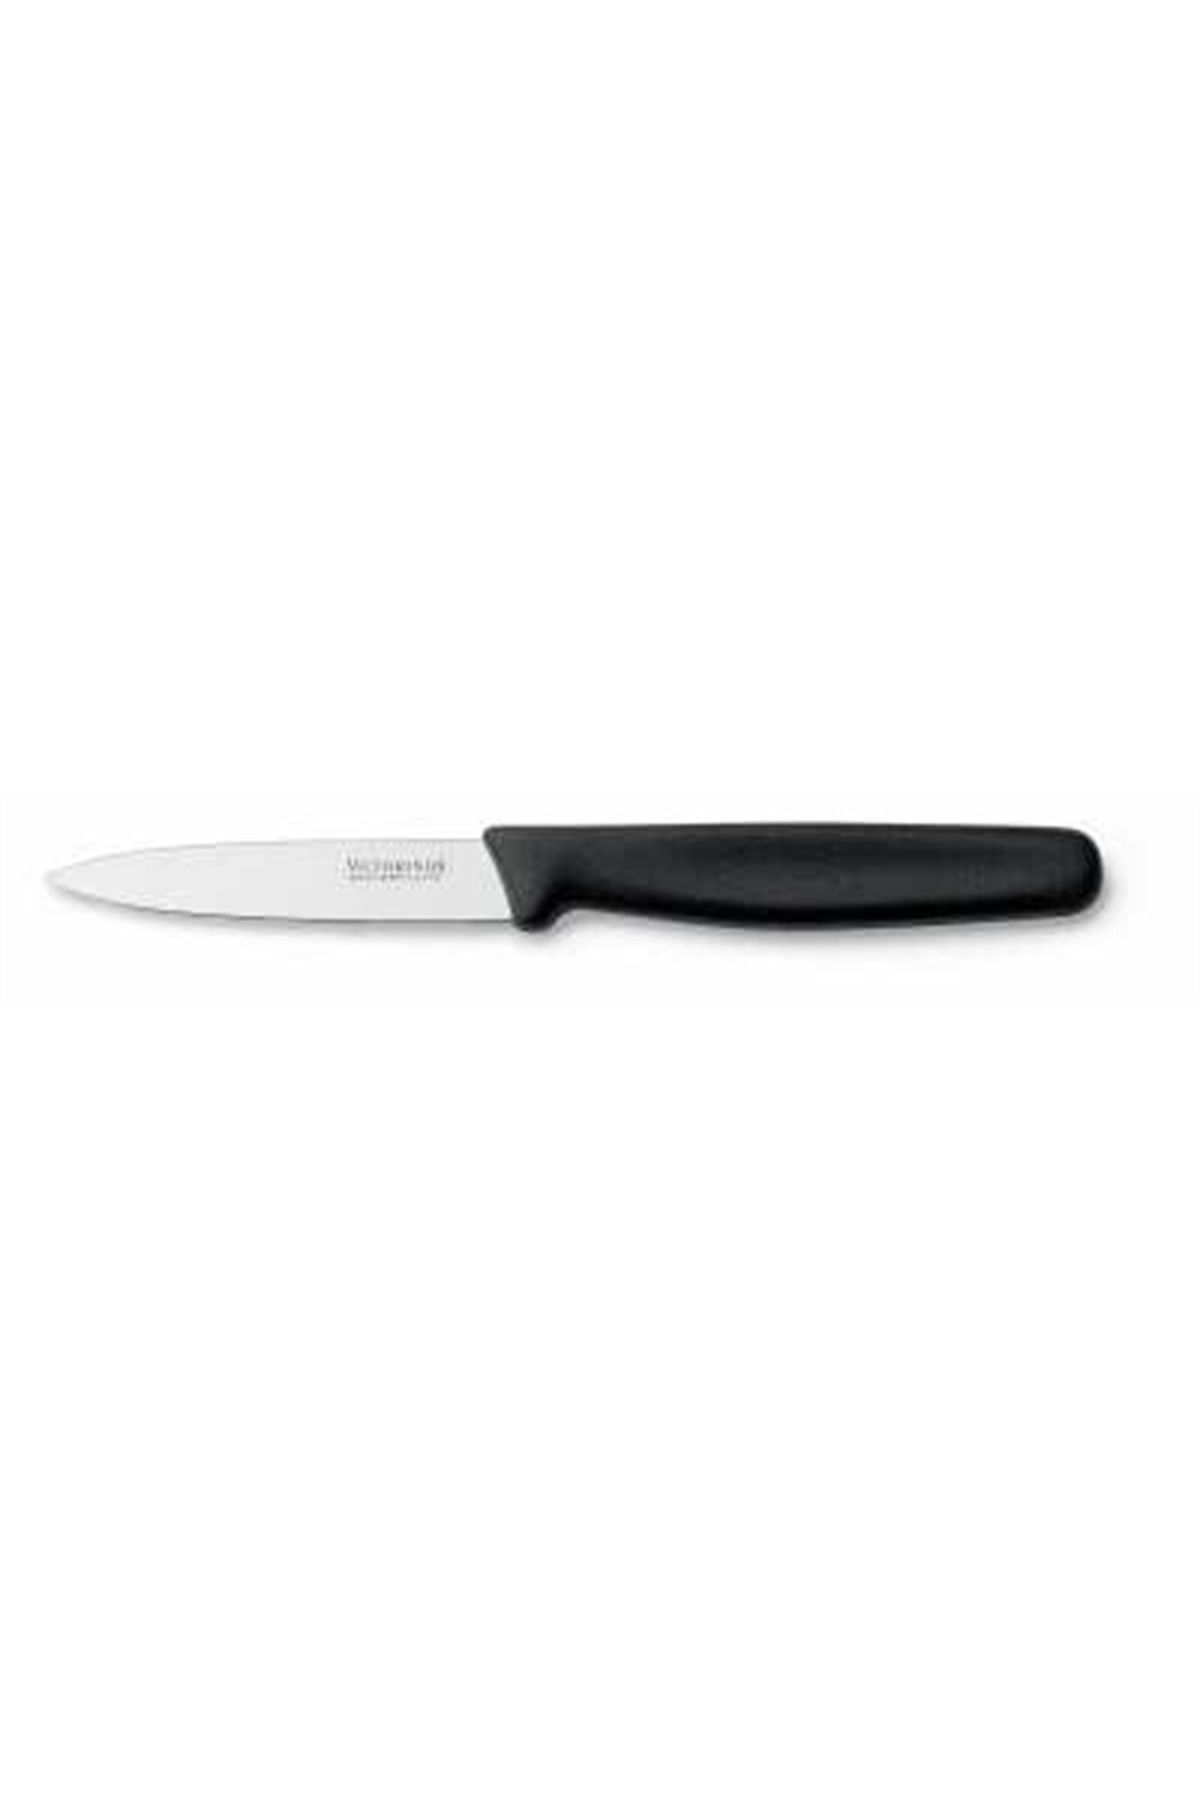 VICTORINOX 5.3003 8cm Şef Soyma Bıçağı